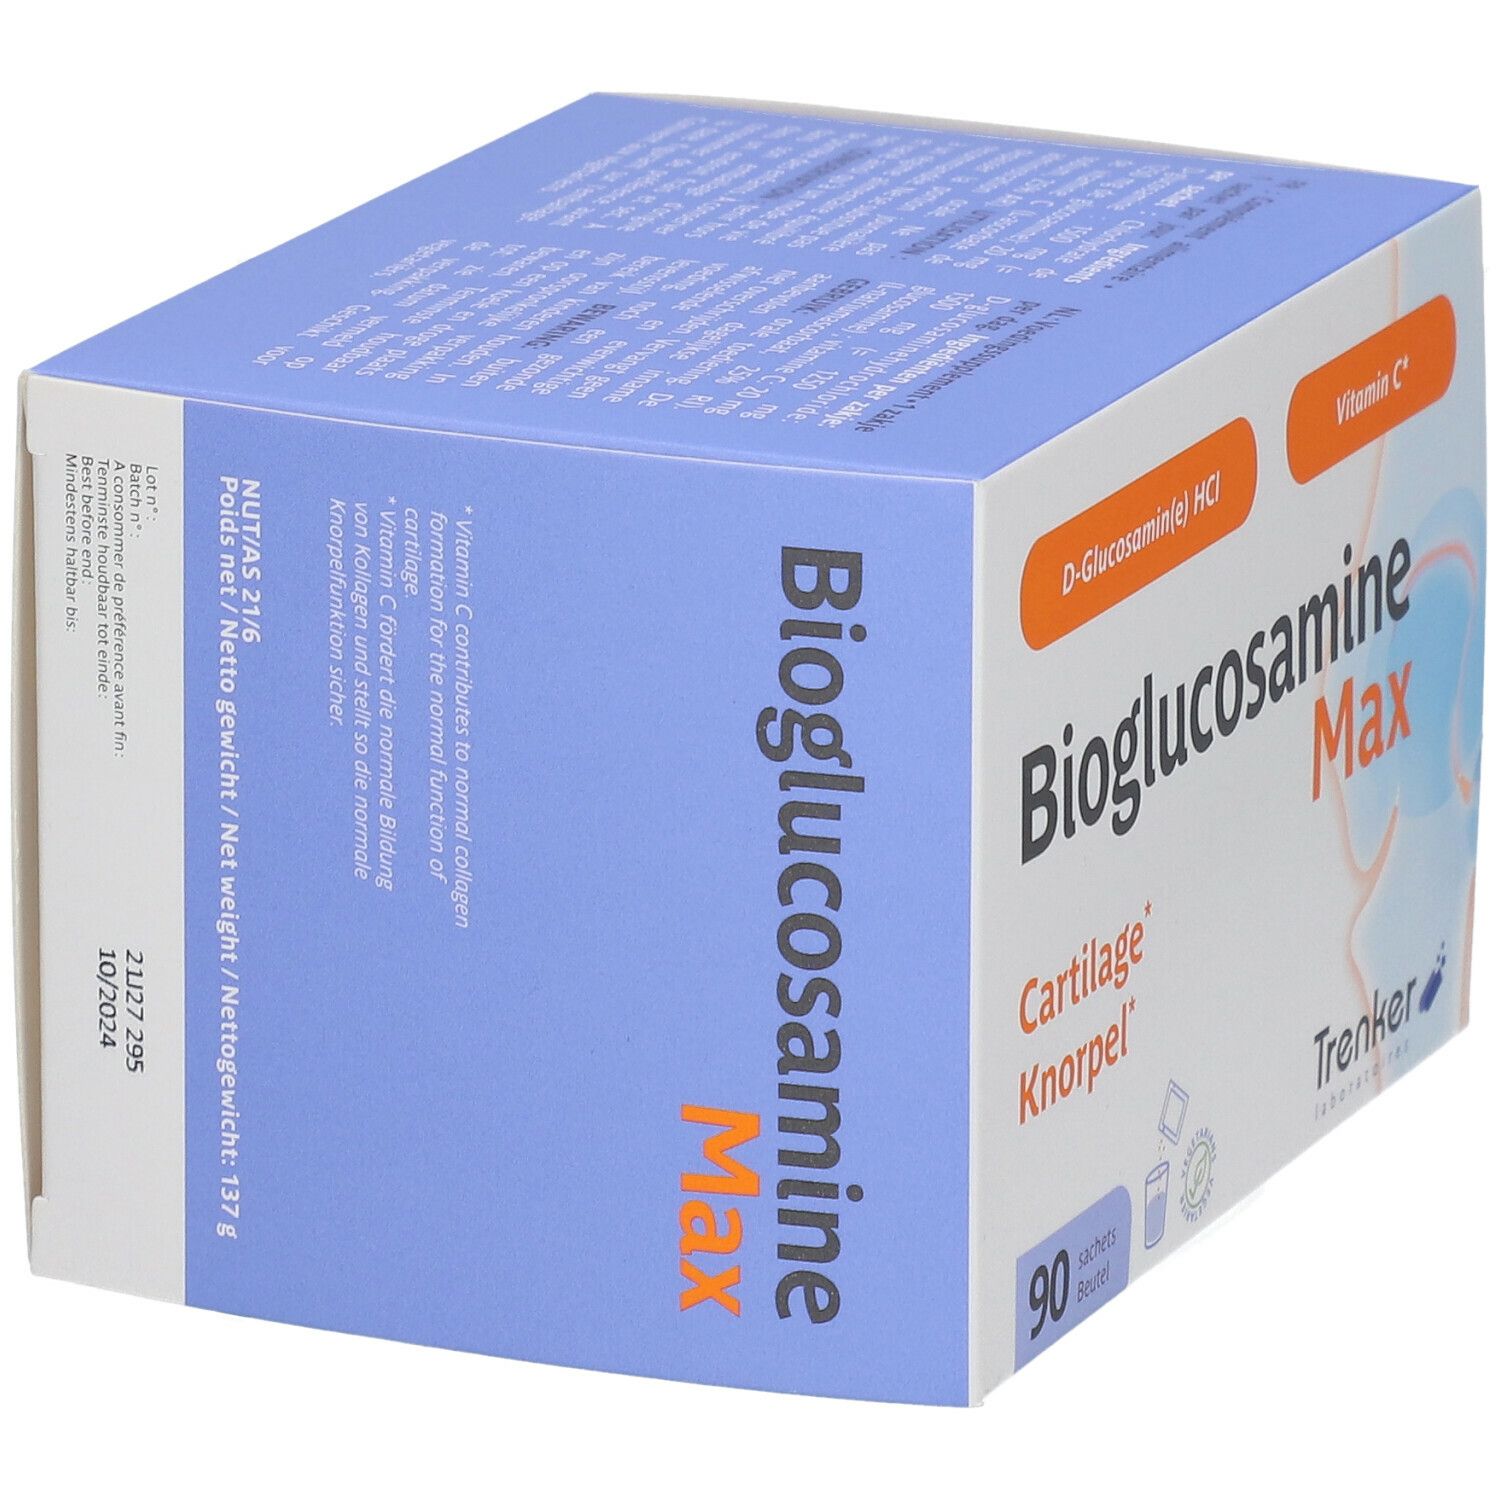 Bioglucosamine Max